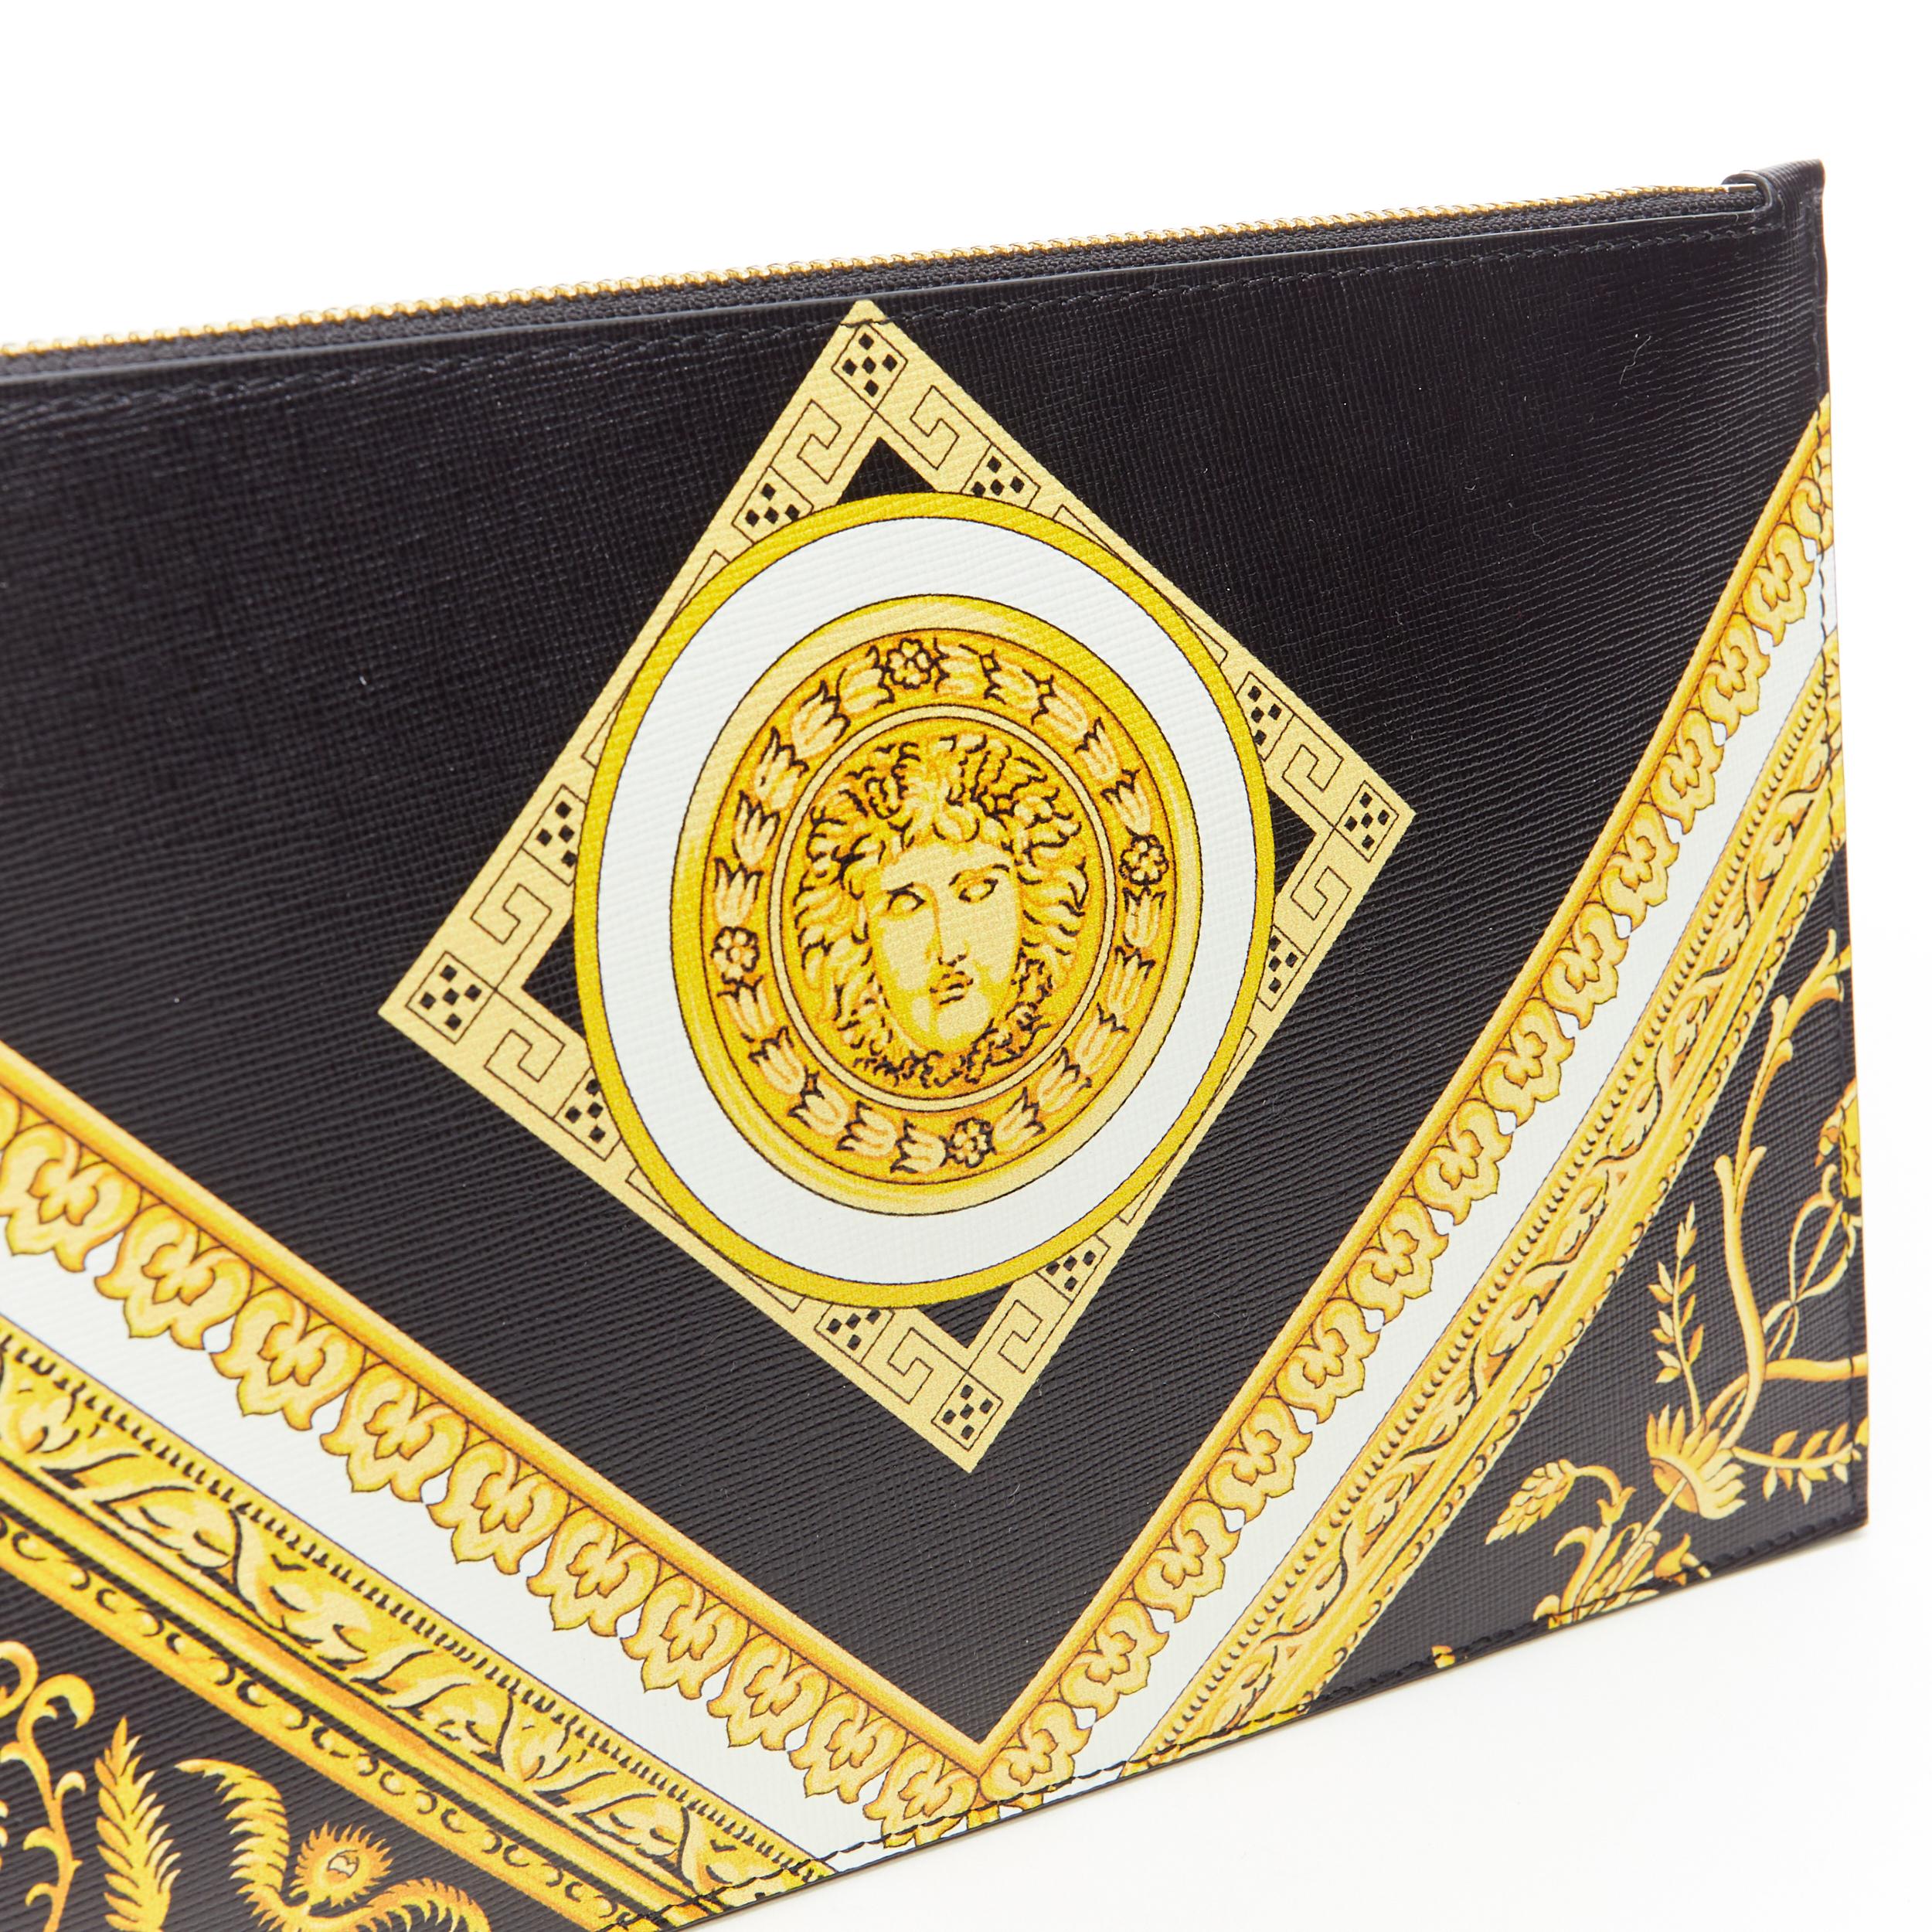 Women's new VERSACE black gold baroque Medusa print saffiano calf leather zip clutch bag